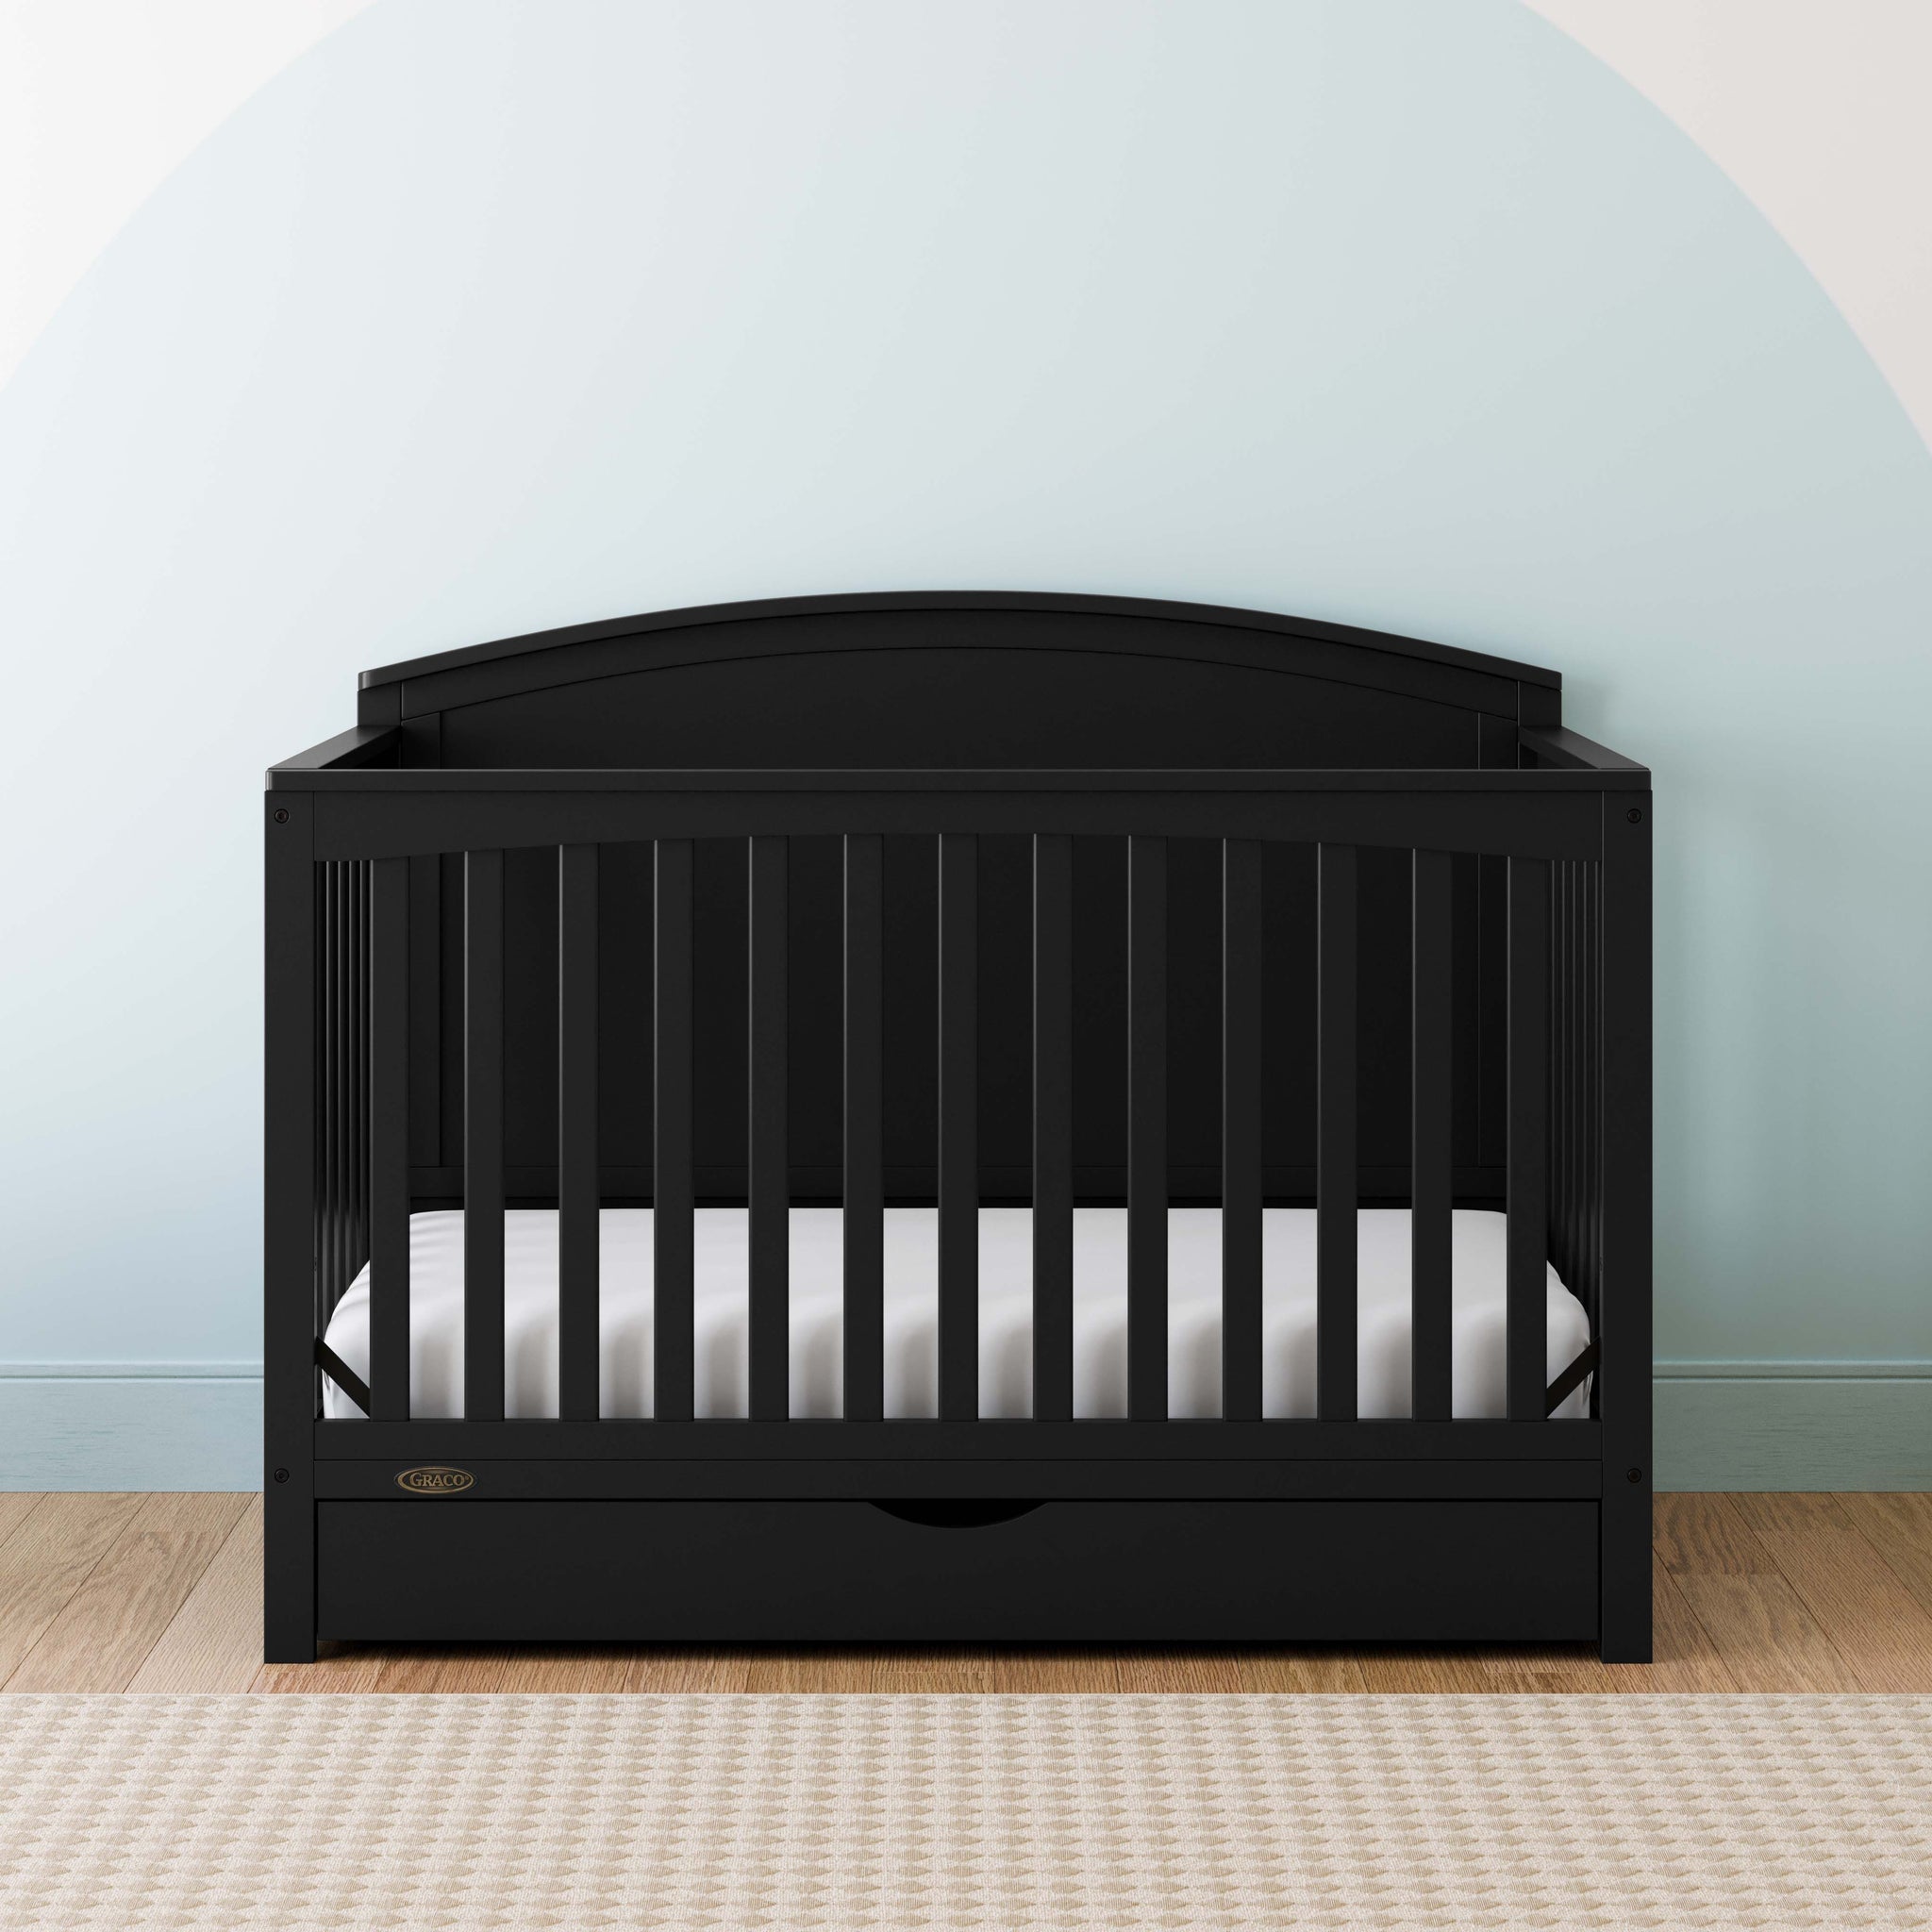 Convertible black crib in a nursery